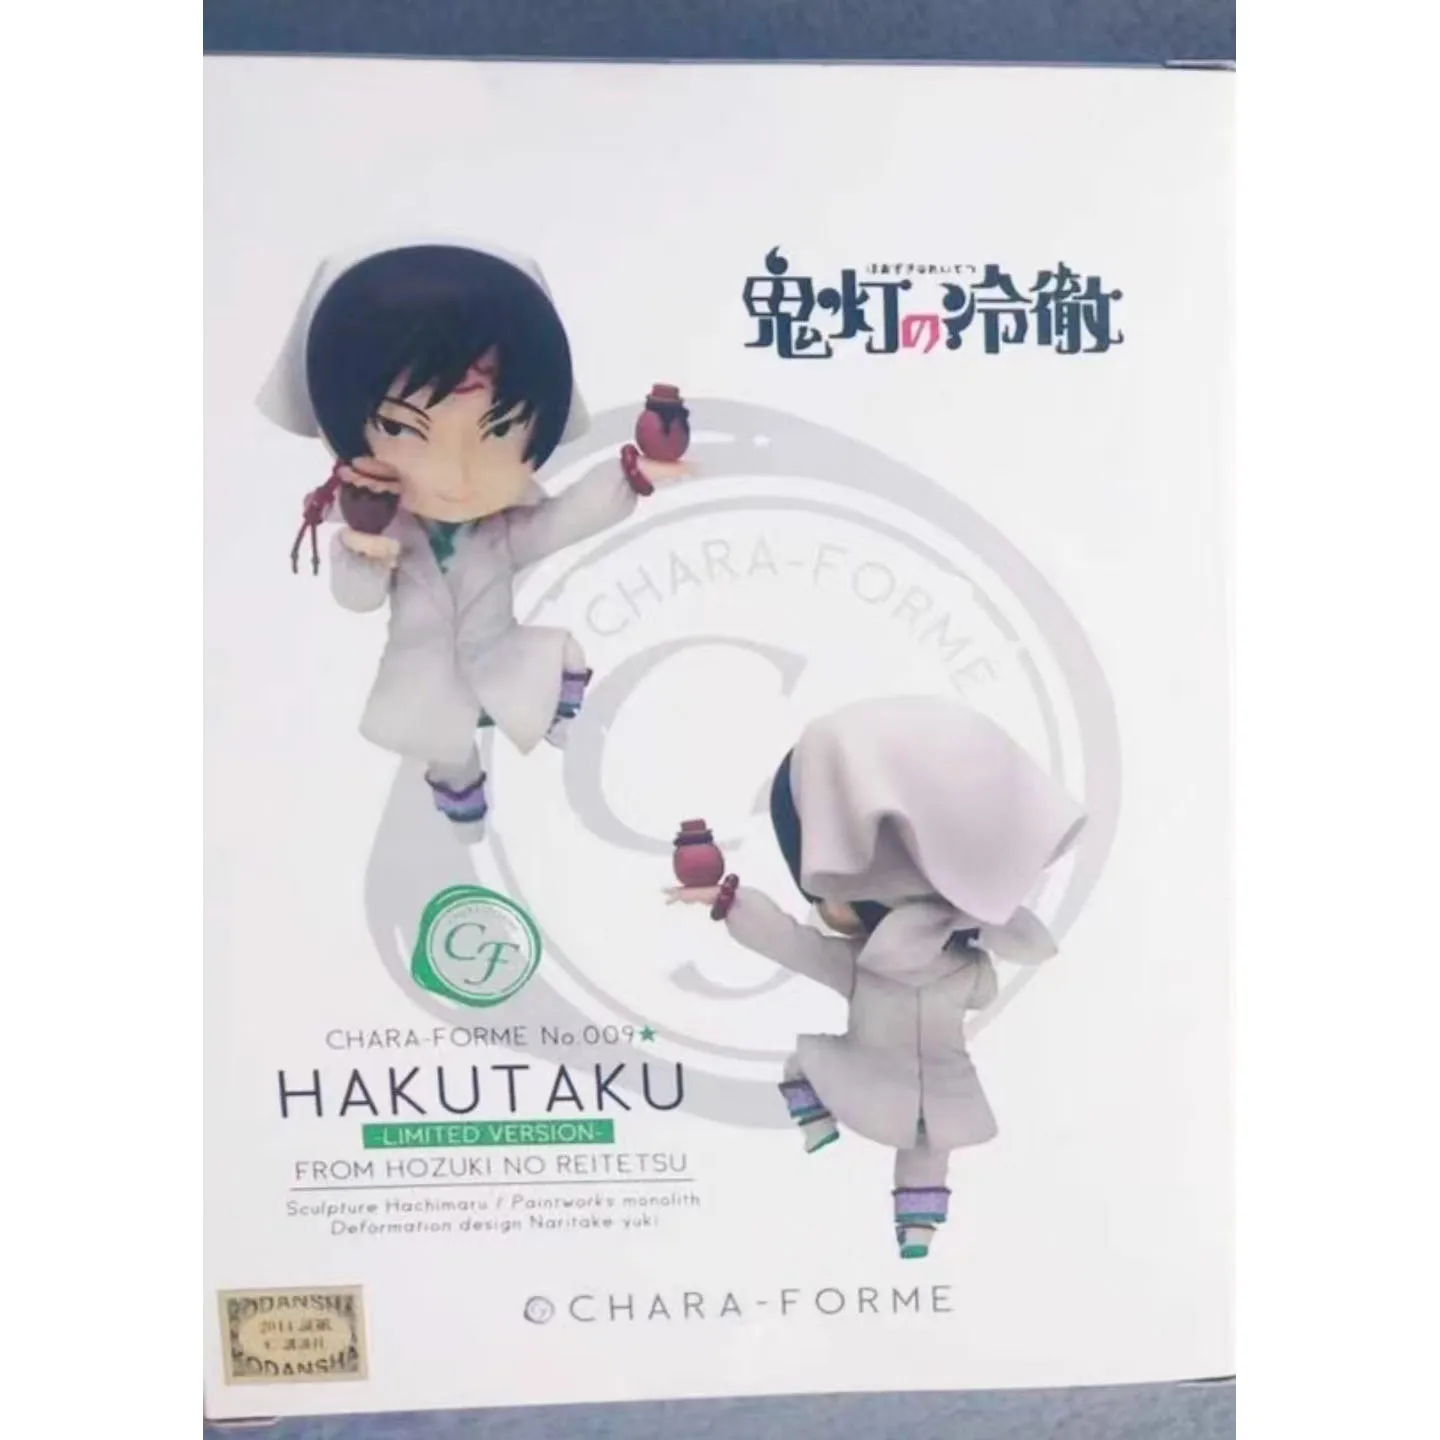 100% Original:Koutetsujou No Kabaneri Mumei Haimen Battle 23CM PVC Action  Figure Anime Figure Model Toys Collection Doll Gift - AliExpress